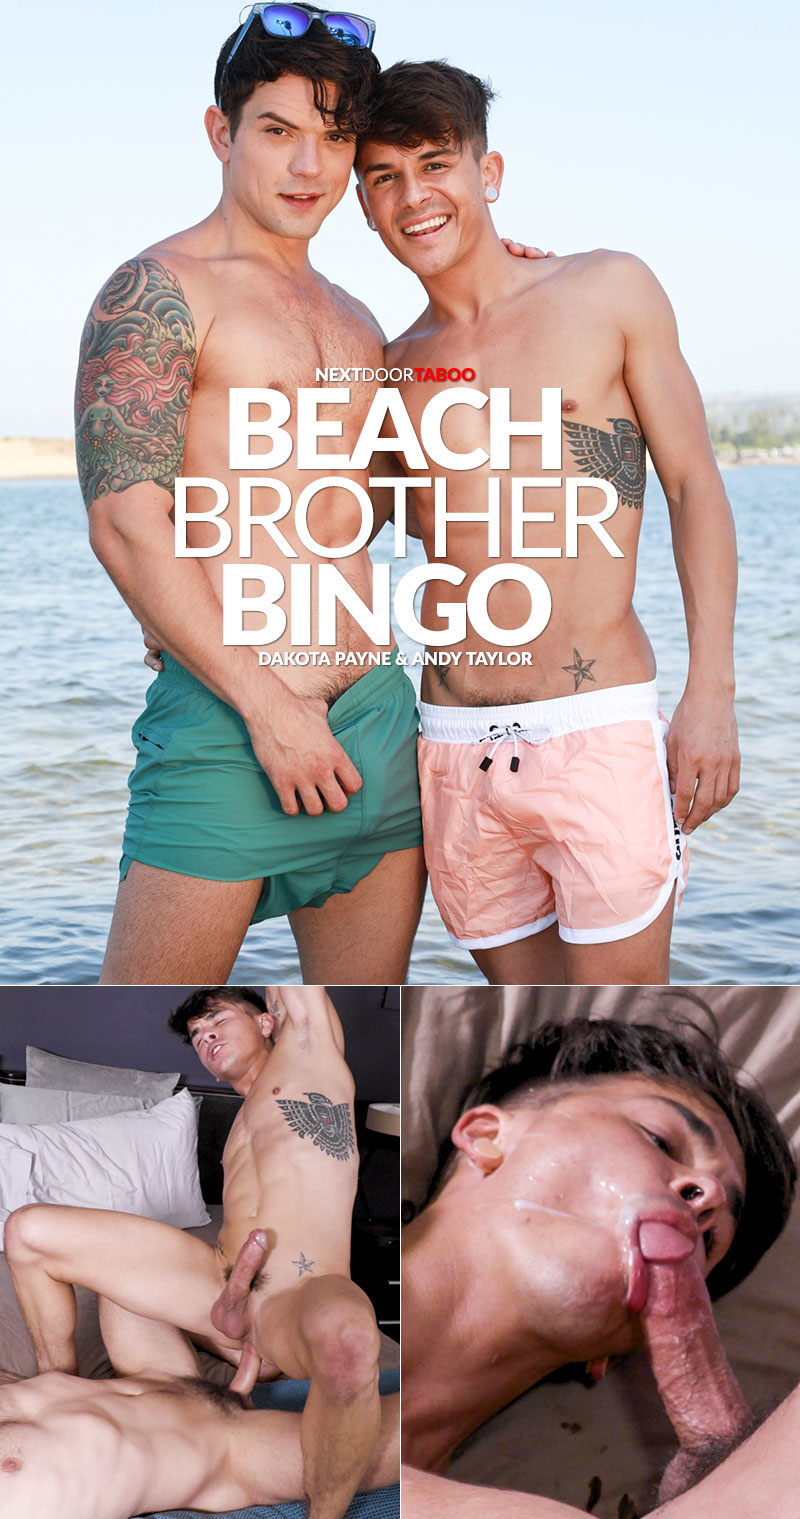 Next Door Taboo: Dakota Payne pounds Andy Taylor bareback in "Beach Brother Bingo, Part 2"